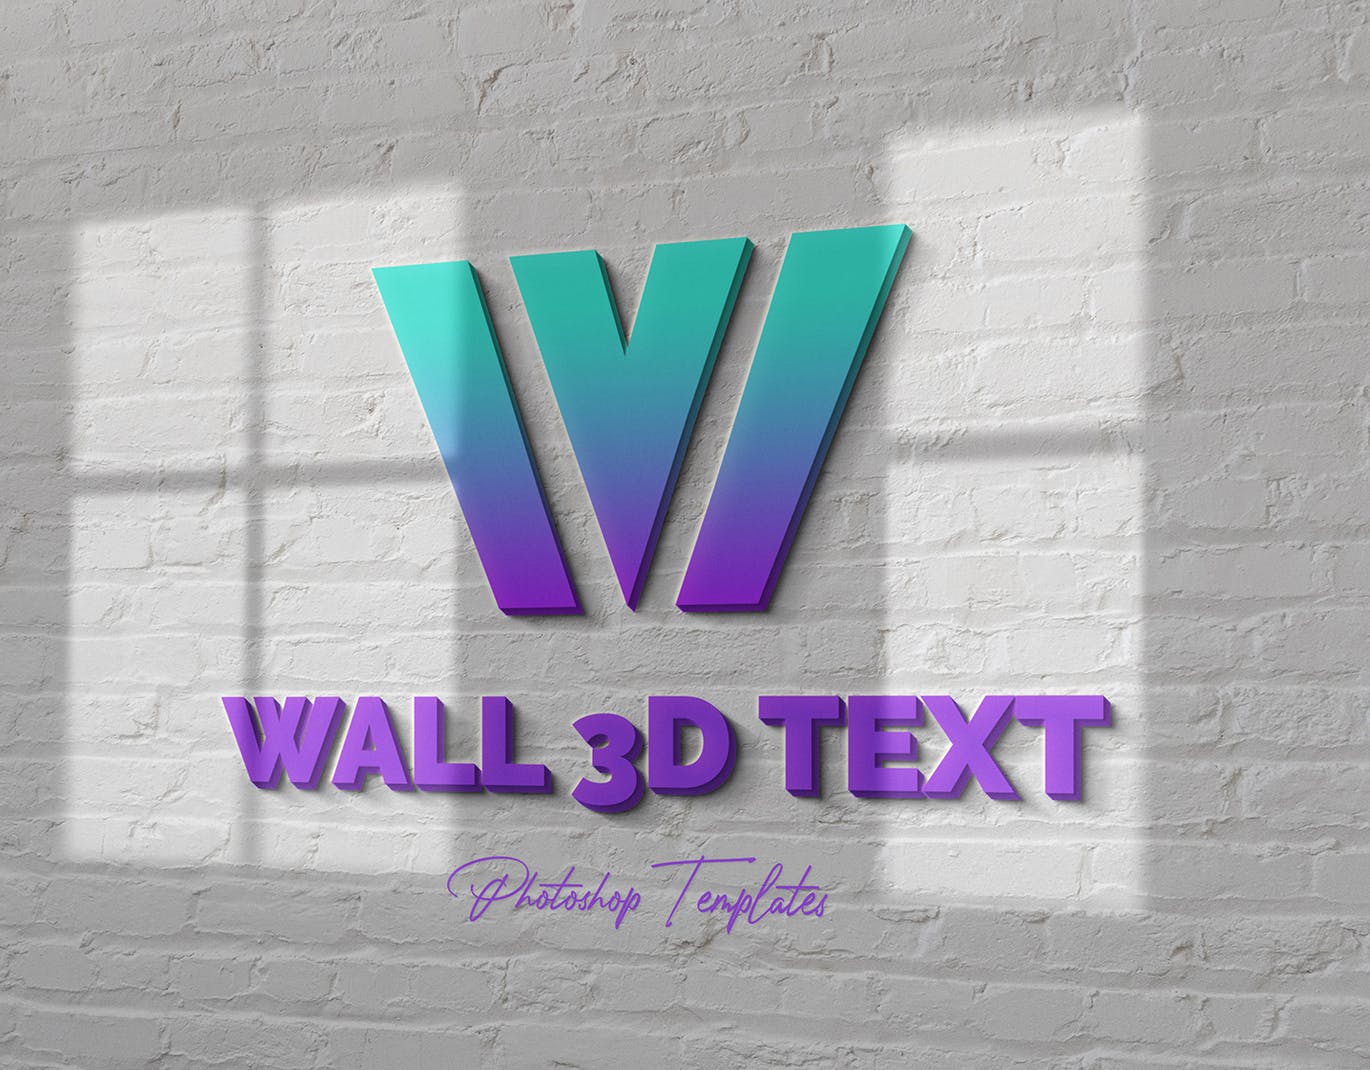 墙体3D字体&Logo设计效果图样机第一素材精选 Wall Text or Logo Mockups插图(6)